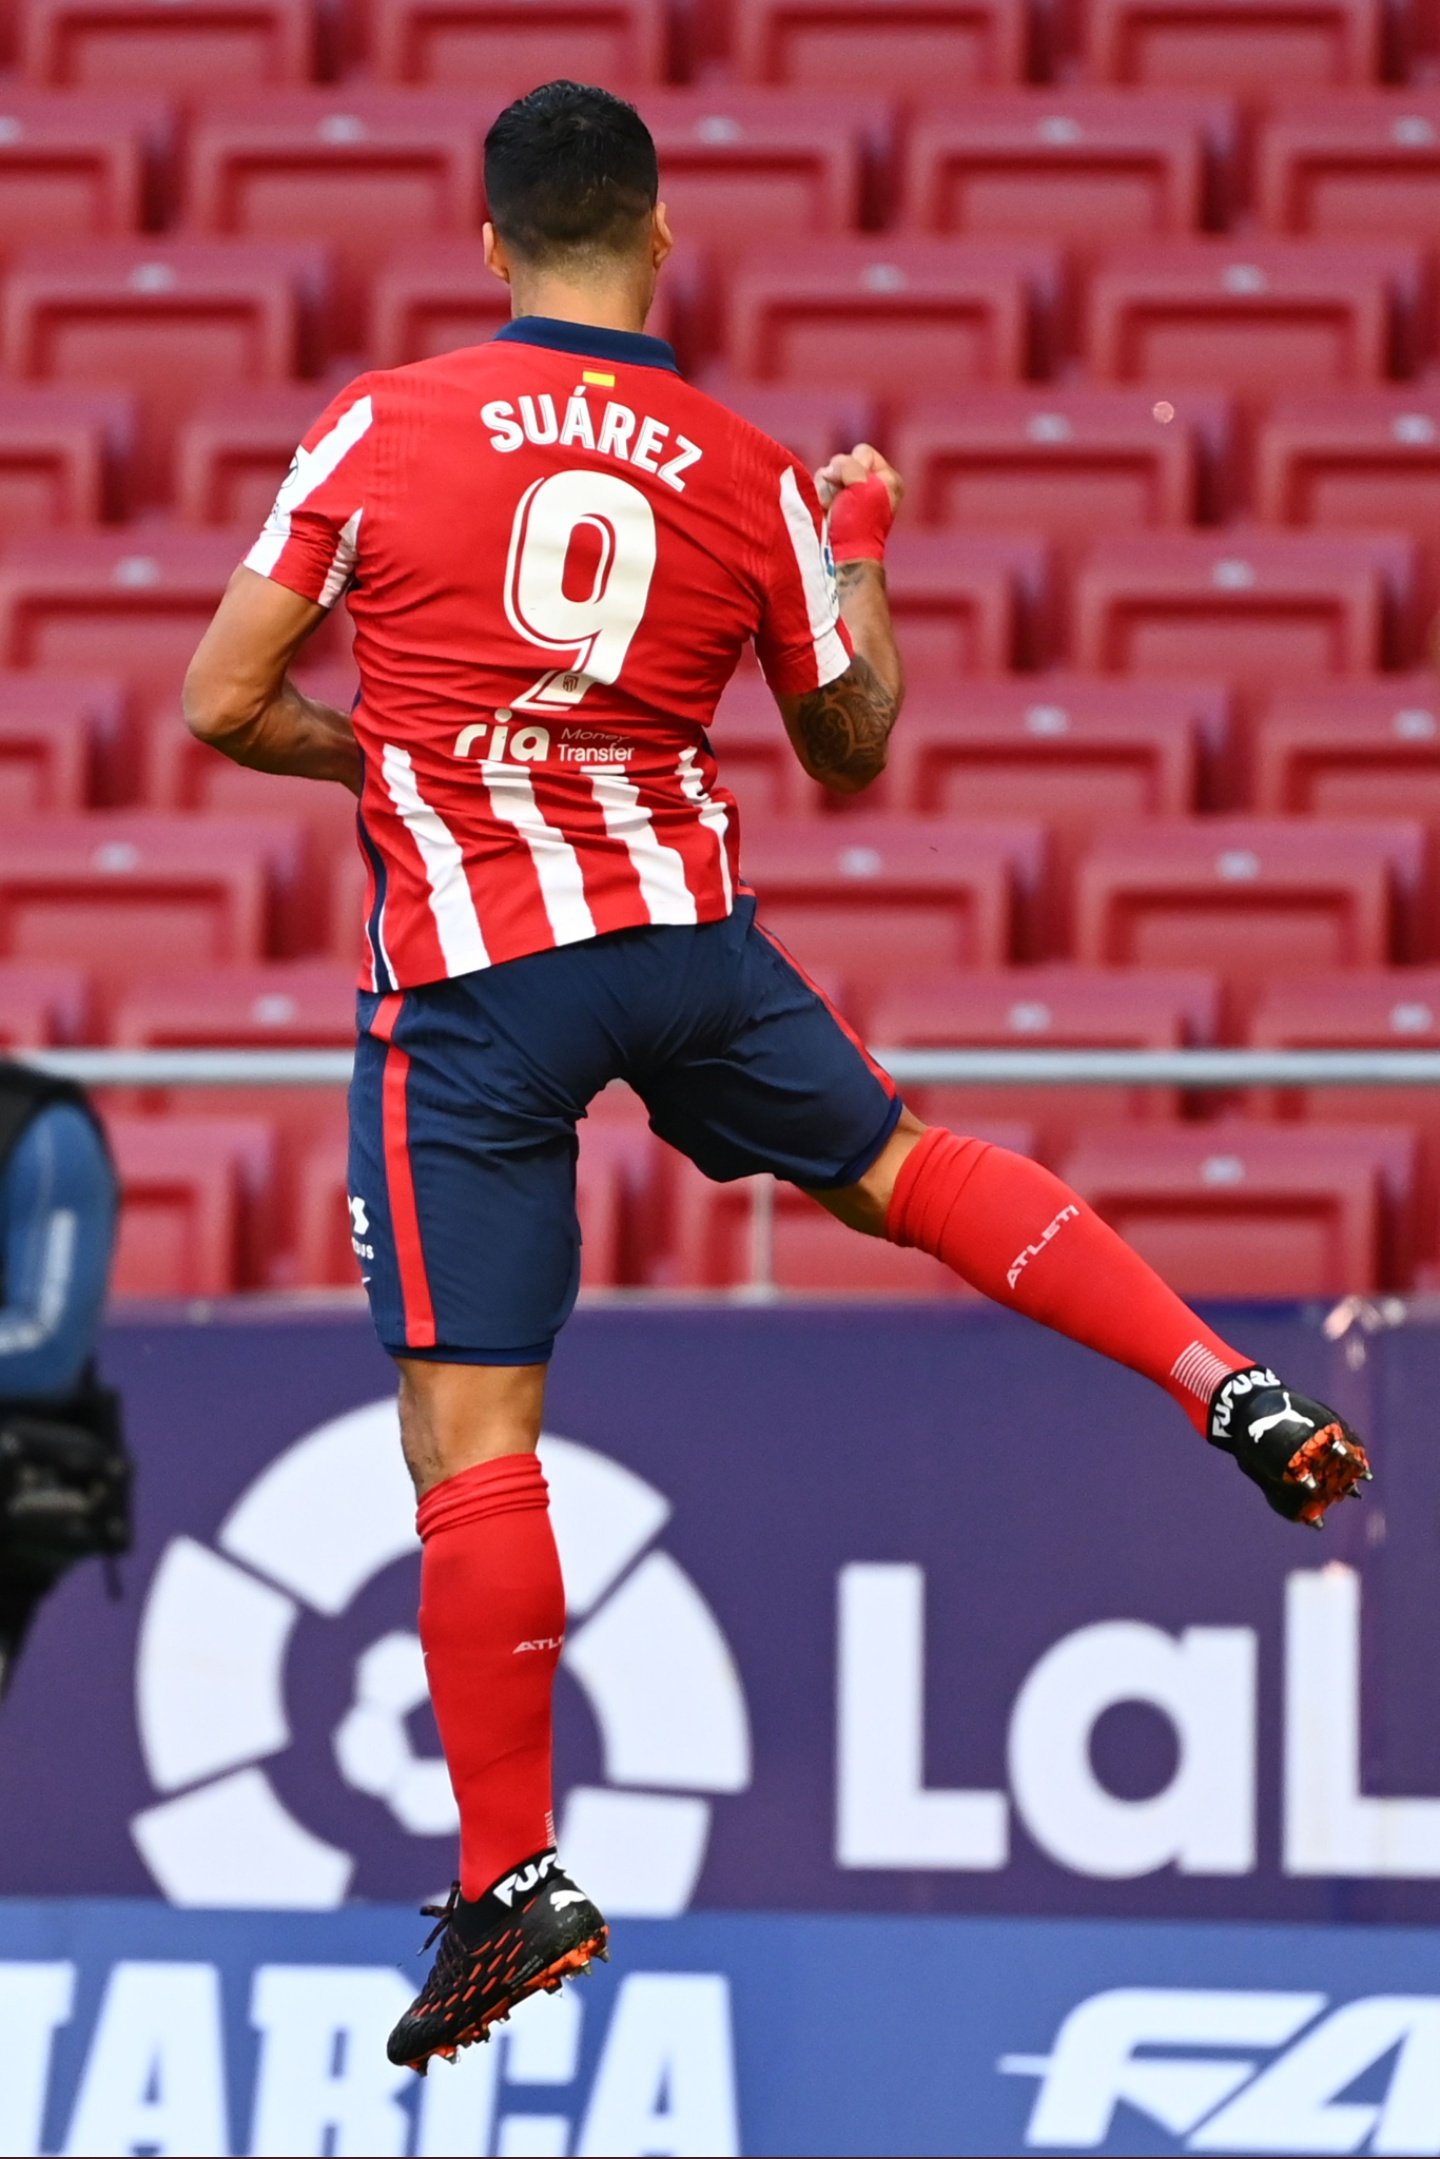 Phenomenal Pistolero: Luis Suárez scores a brace in his debut as Atlético routs Granada 6-1 - THE SPORTS ROOM